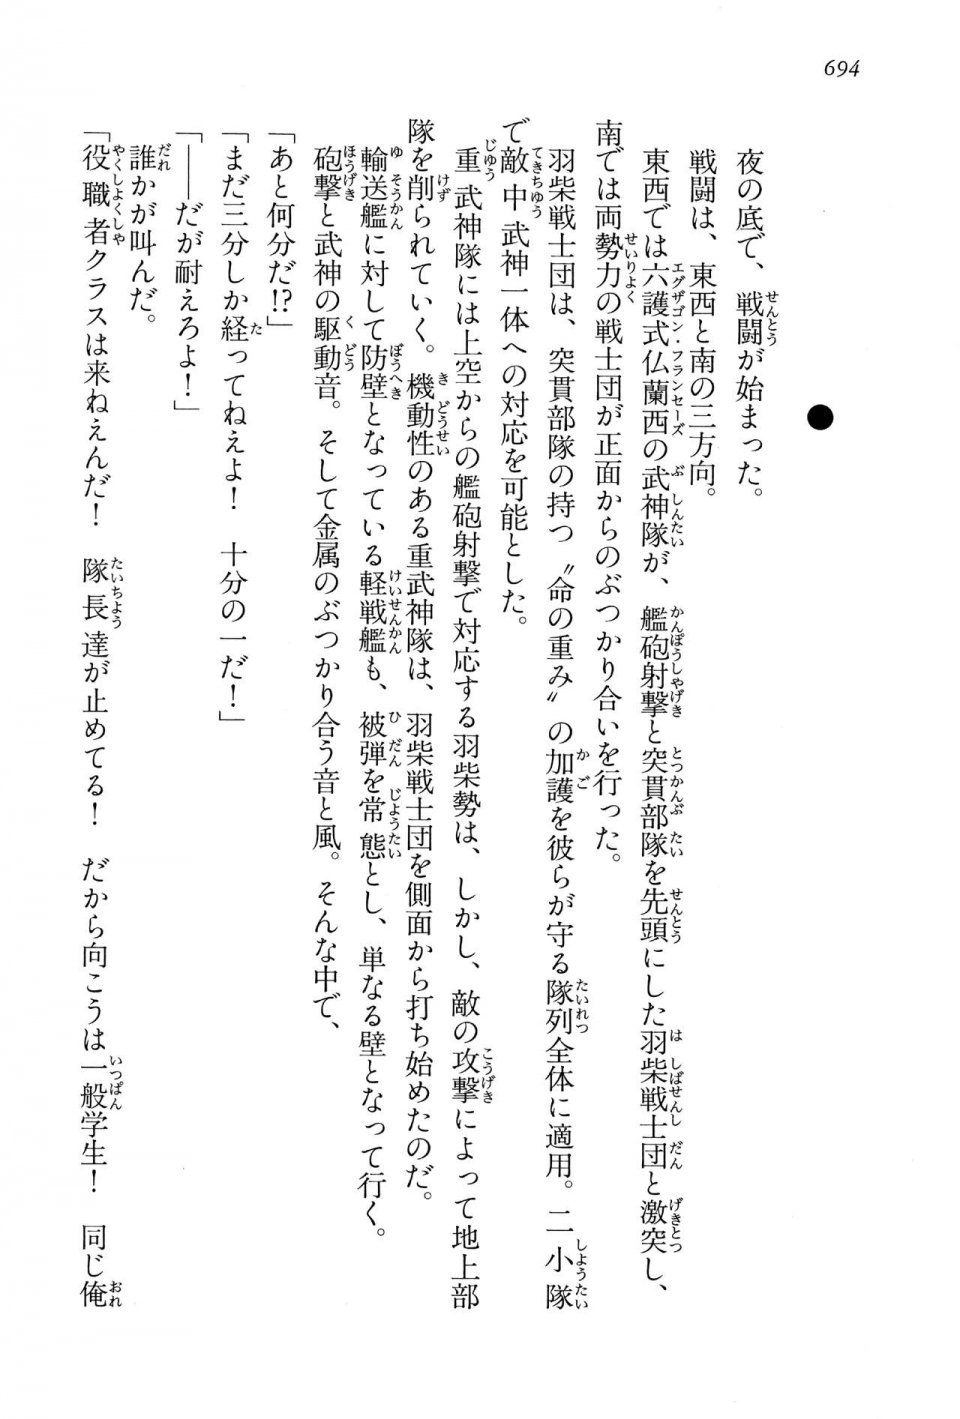 Kyoukai Senjou no Horizon LN Vol 15(6C) Part 2 - Photo #164